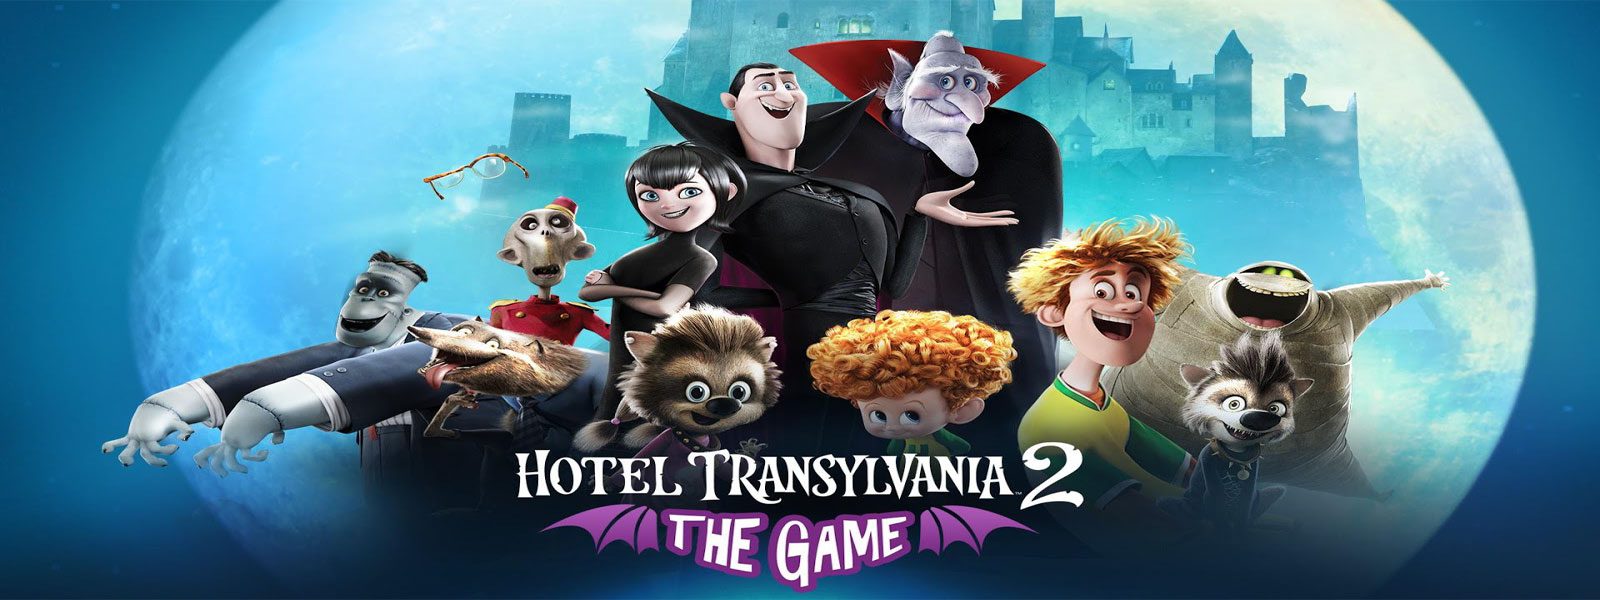 Hotel Transylvania 2 Cover